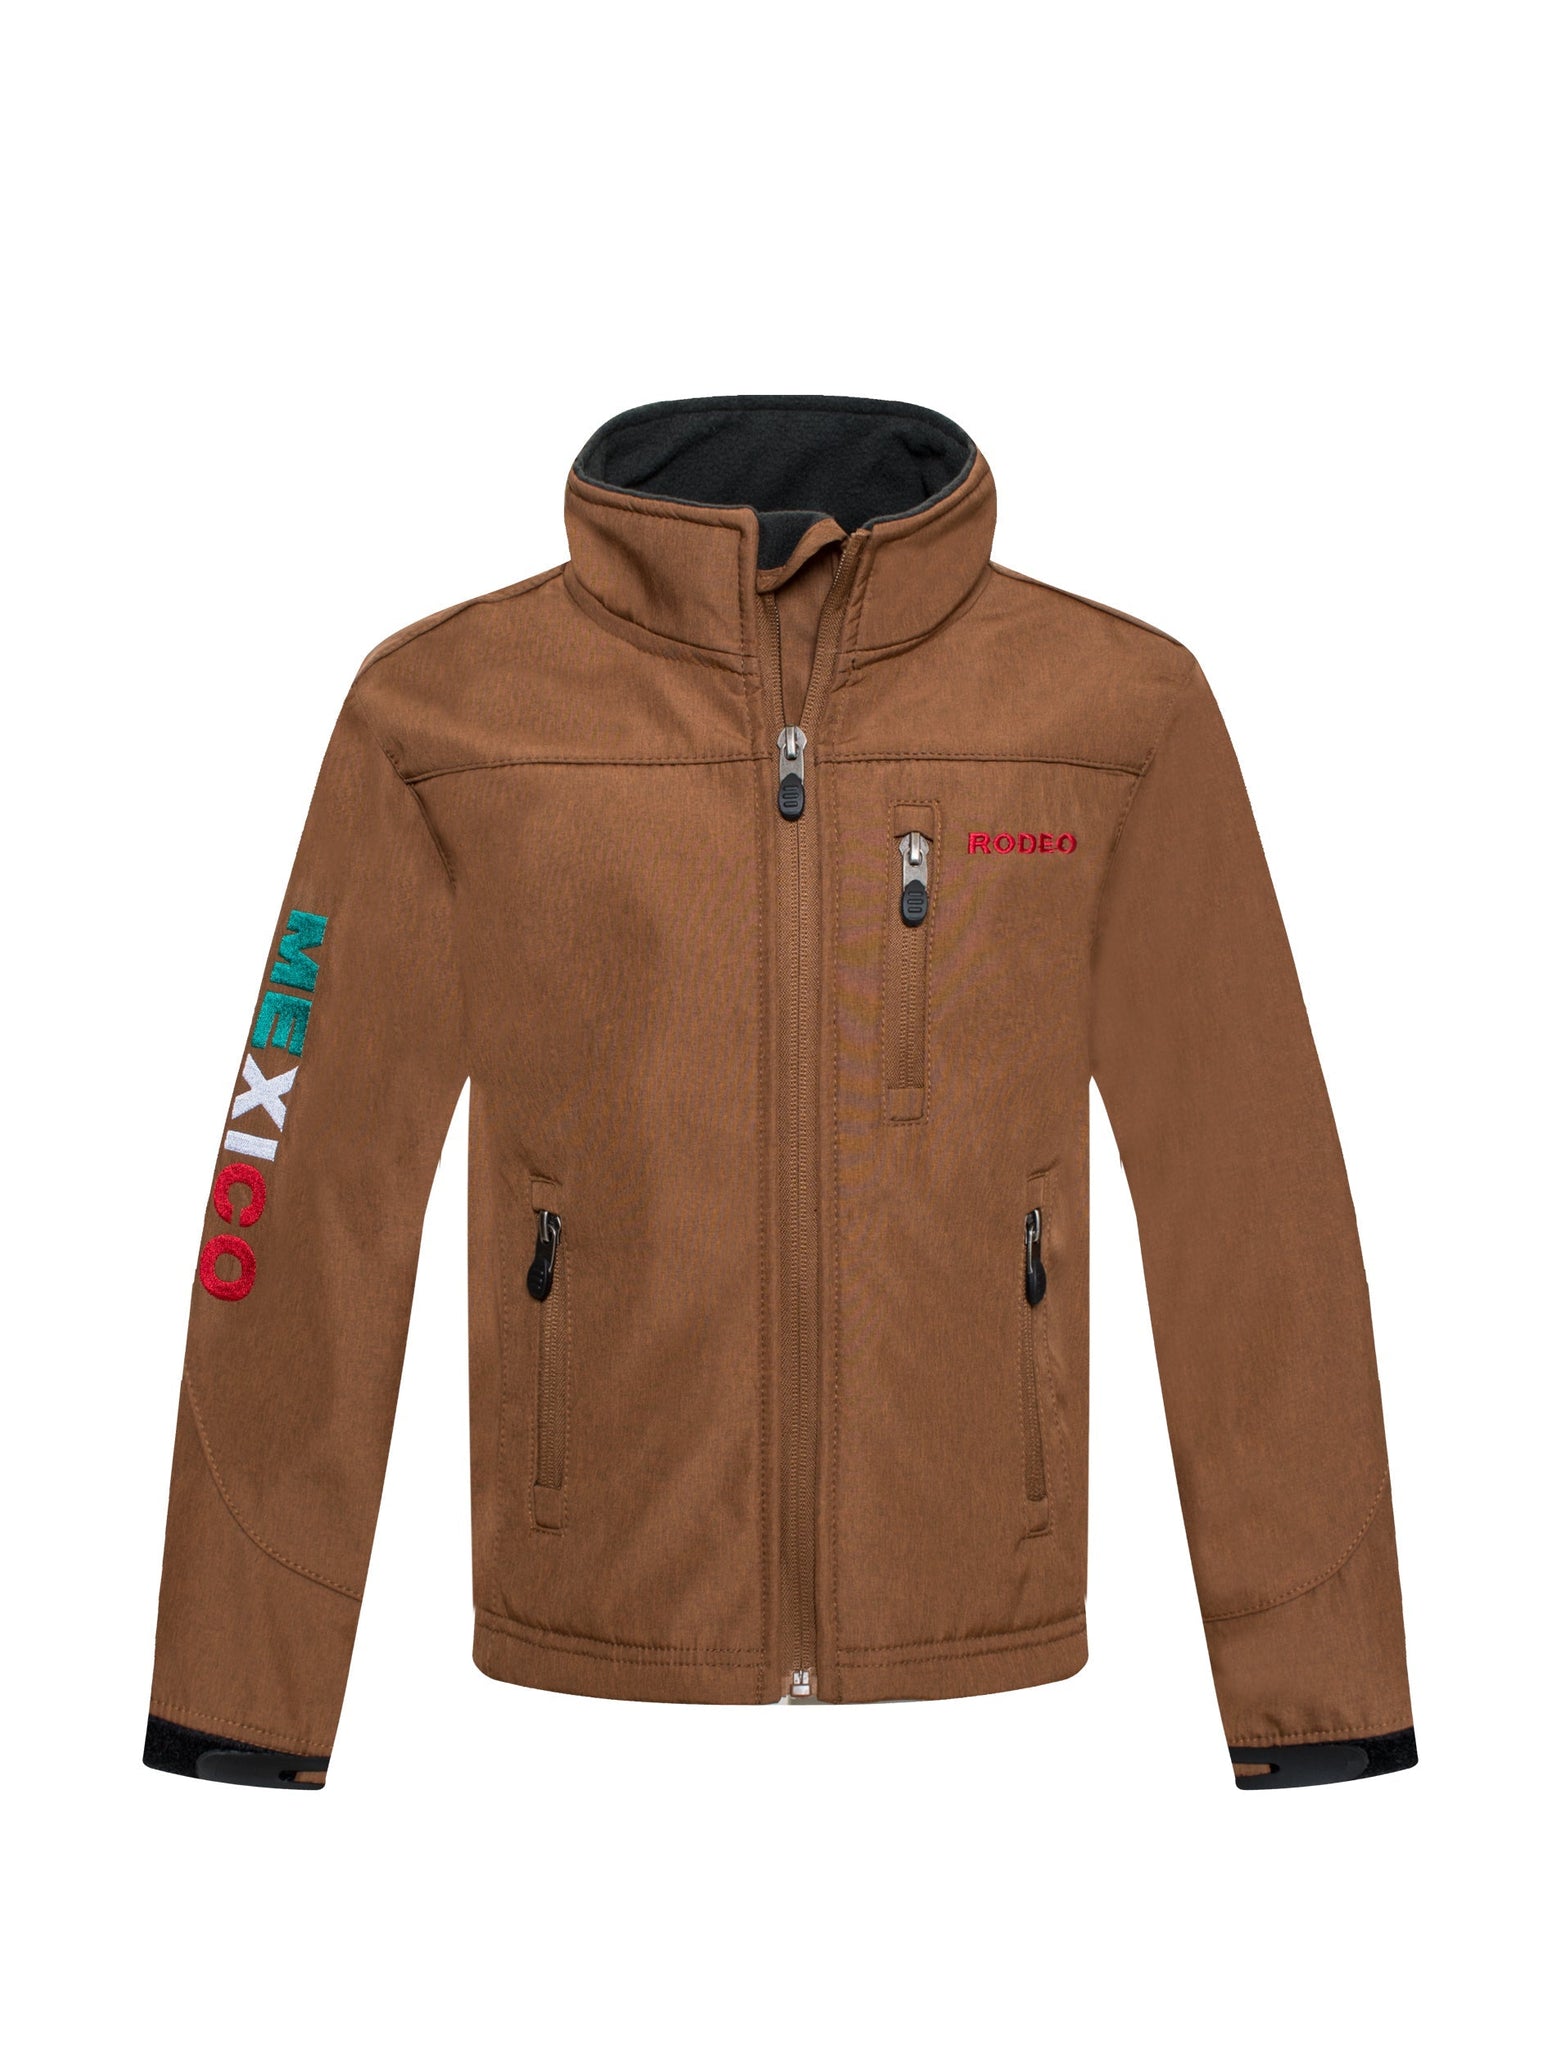 Boys Rodeo Embroidery Jacket -BNJ650-EMB-MHL-COGNAC